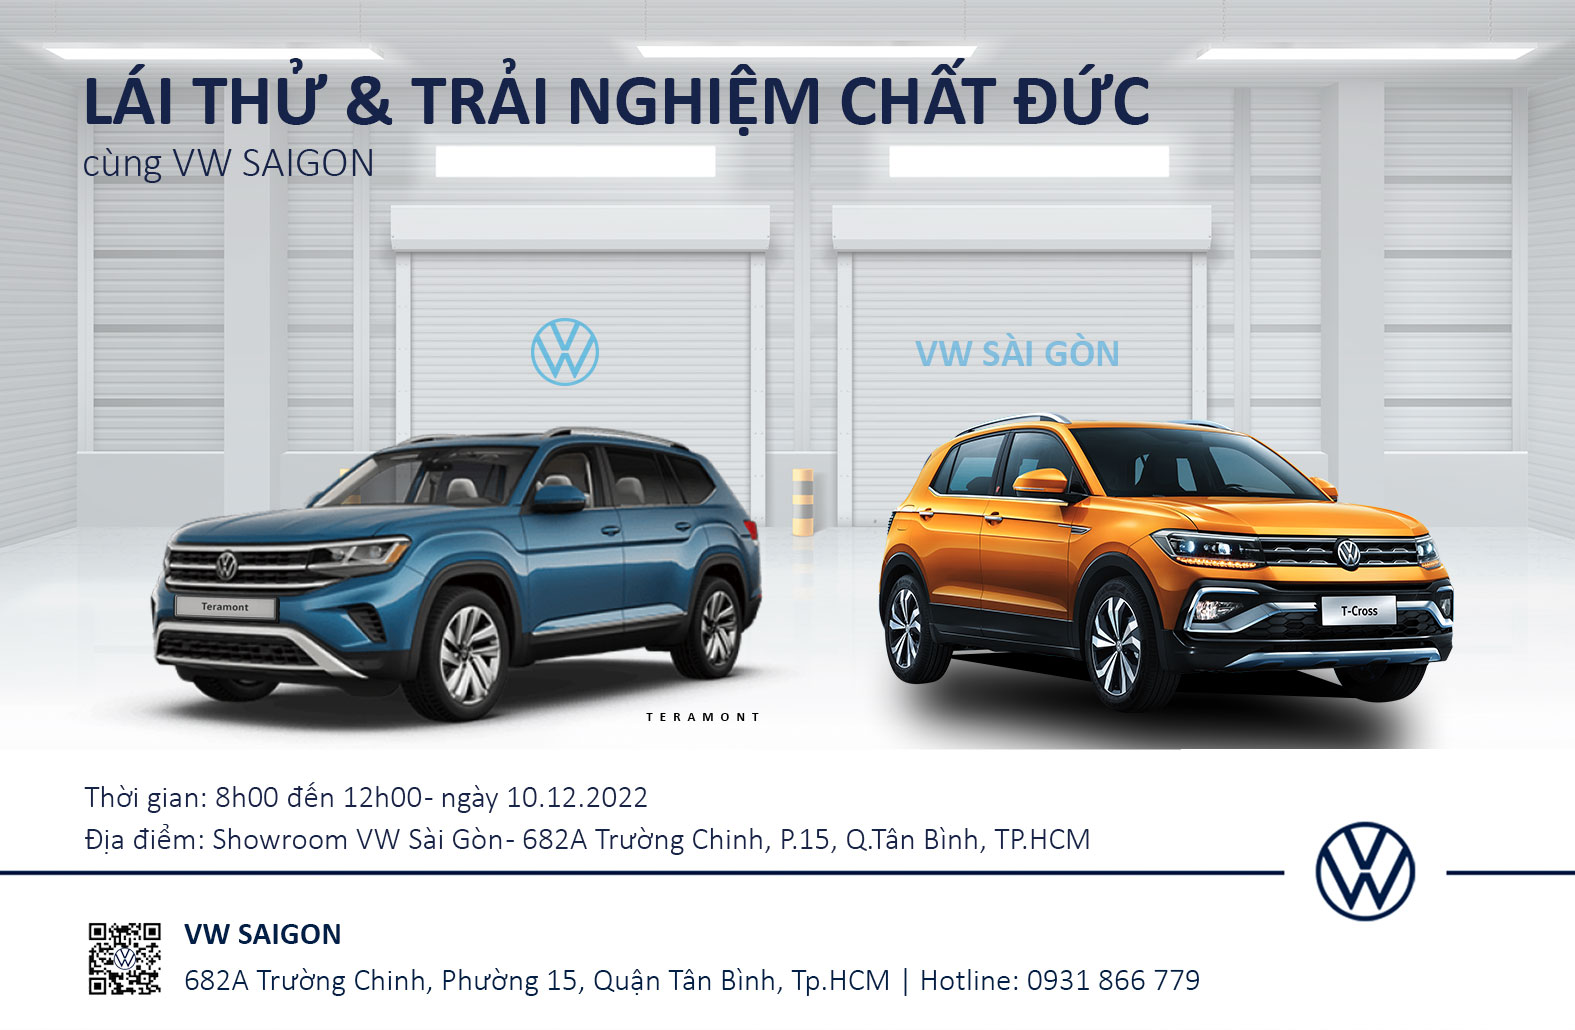 Lai-Thu-Nghiem-Chat-Duc-Cung-VW-SG